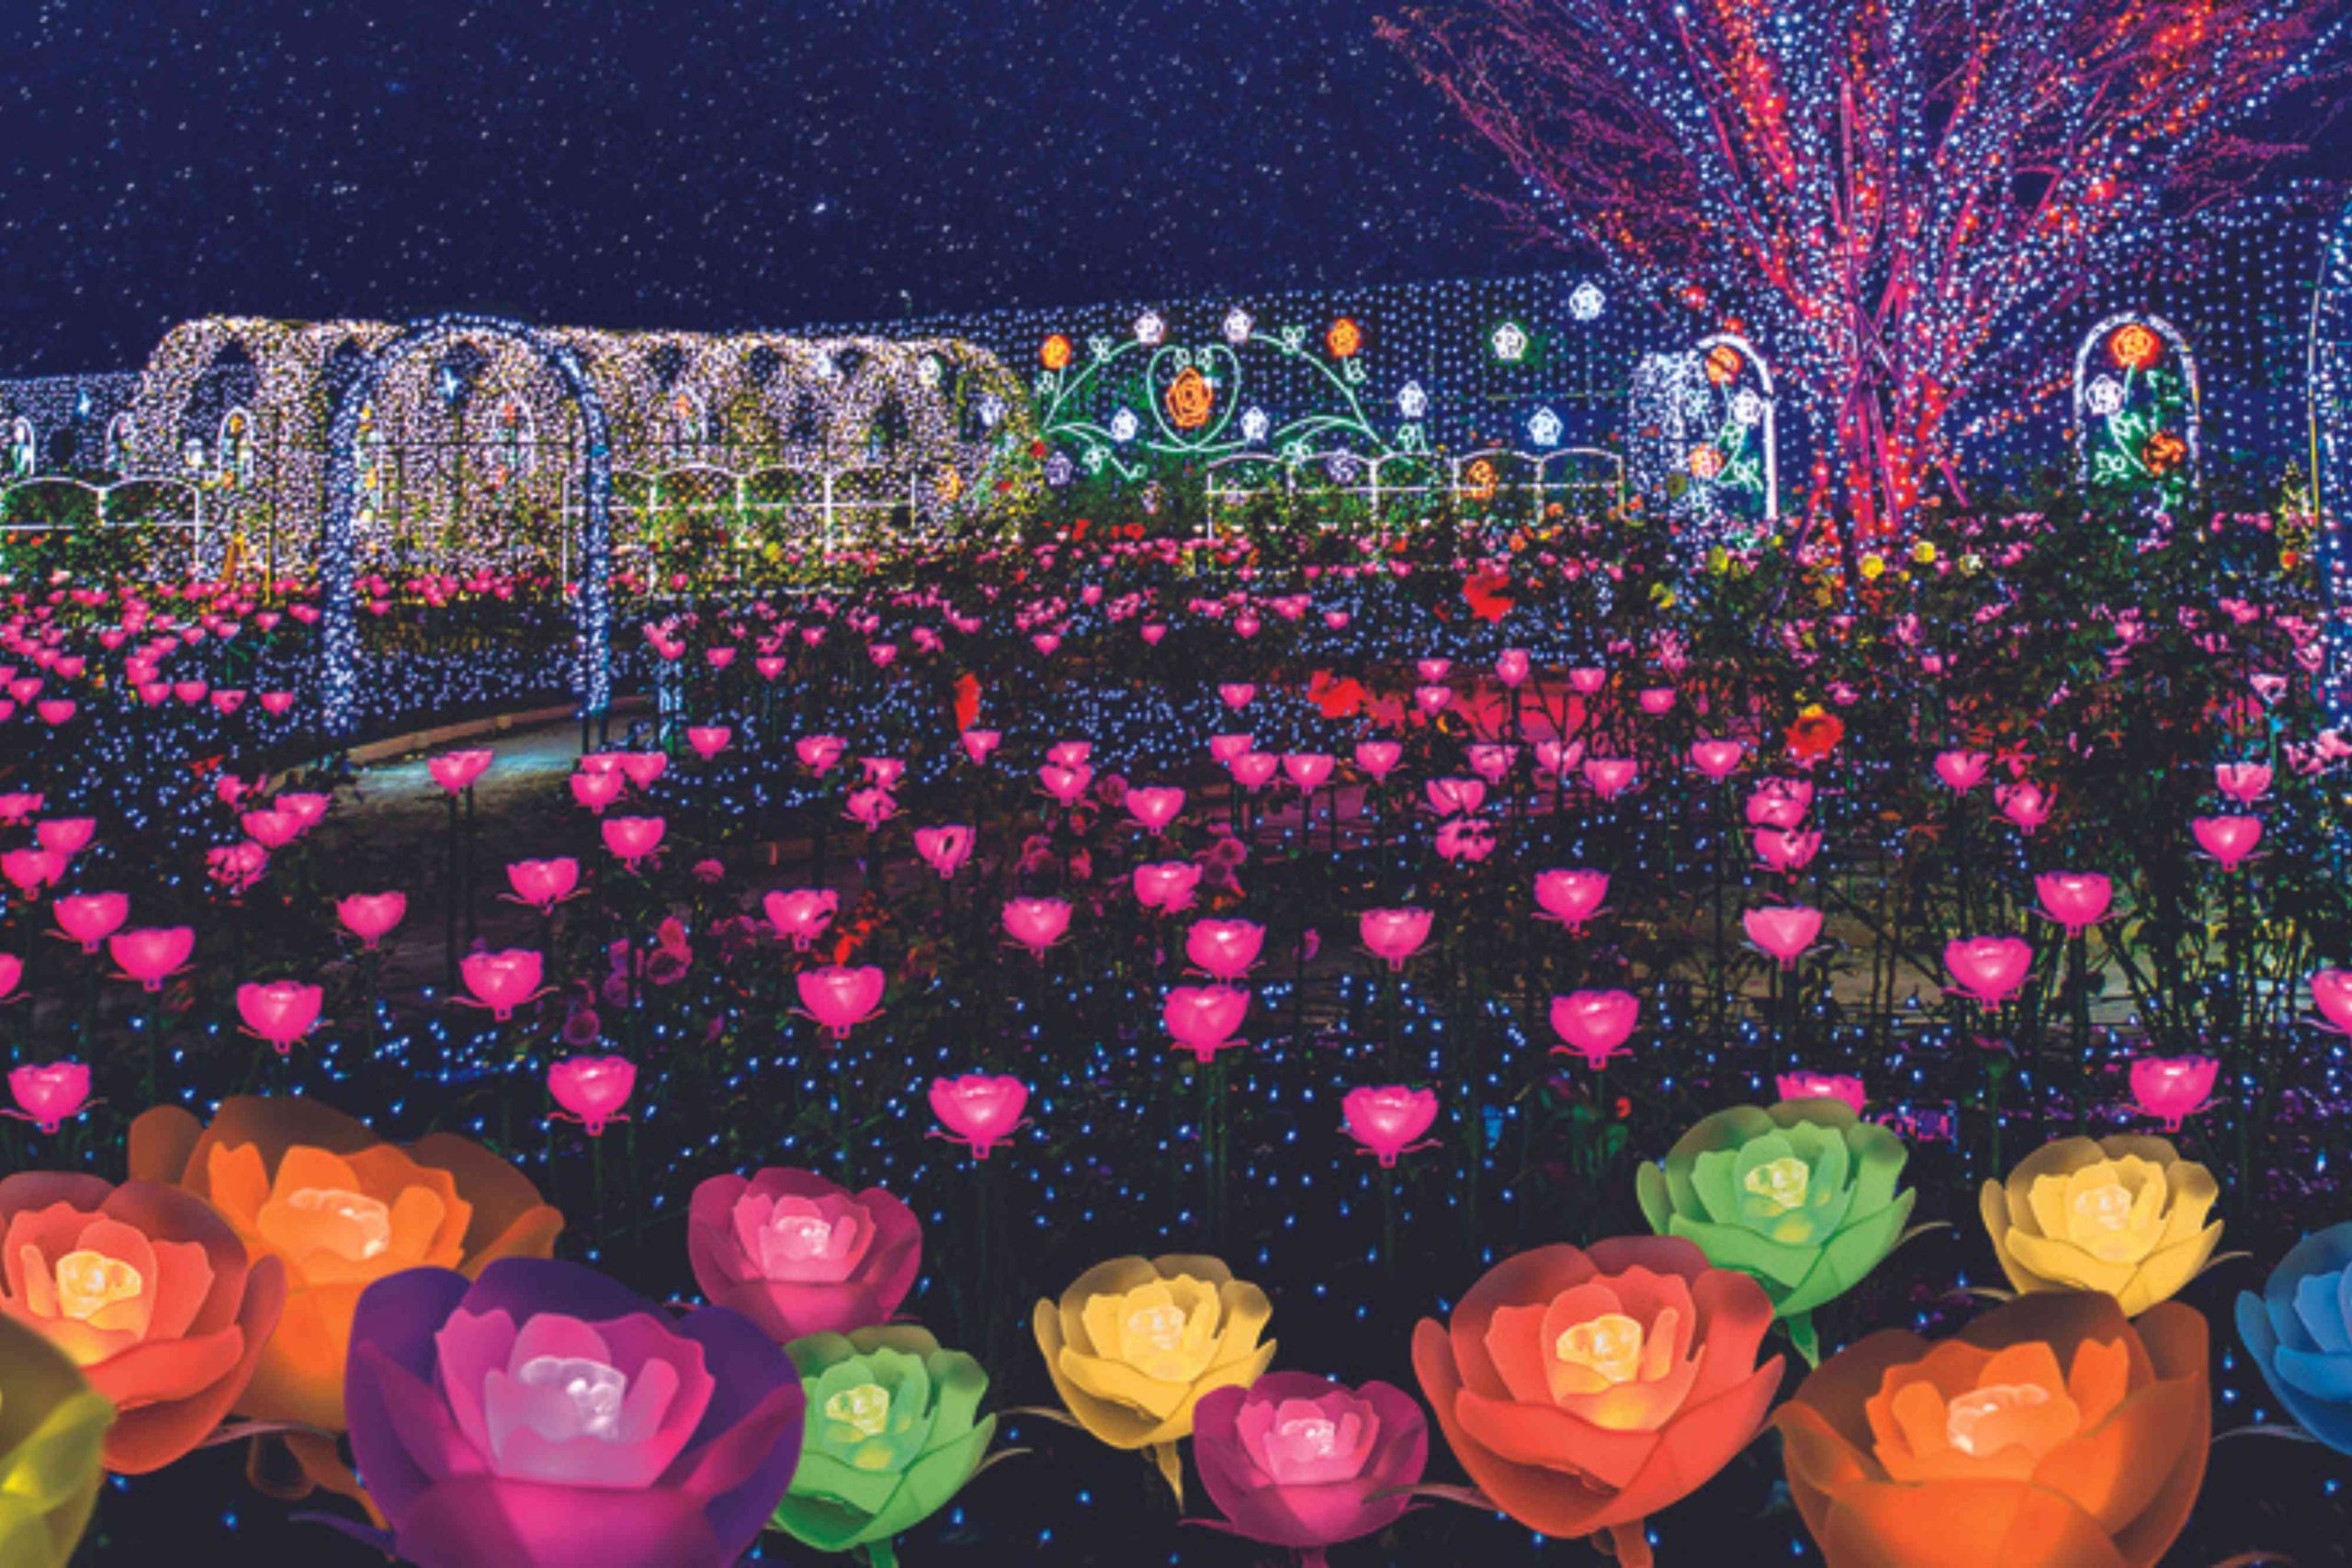 floral night show in ashikaga park